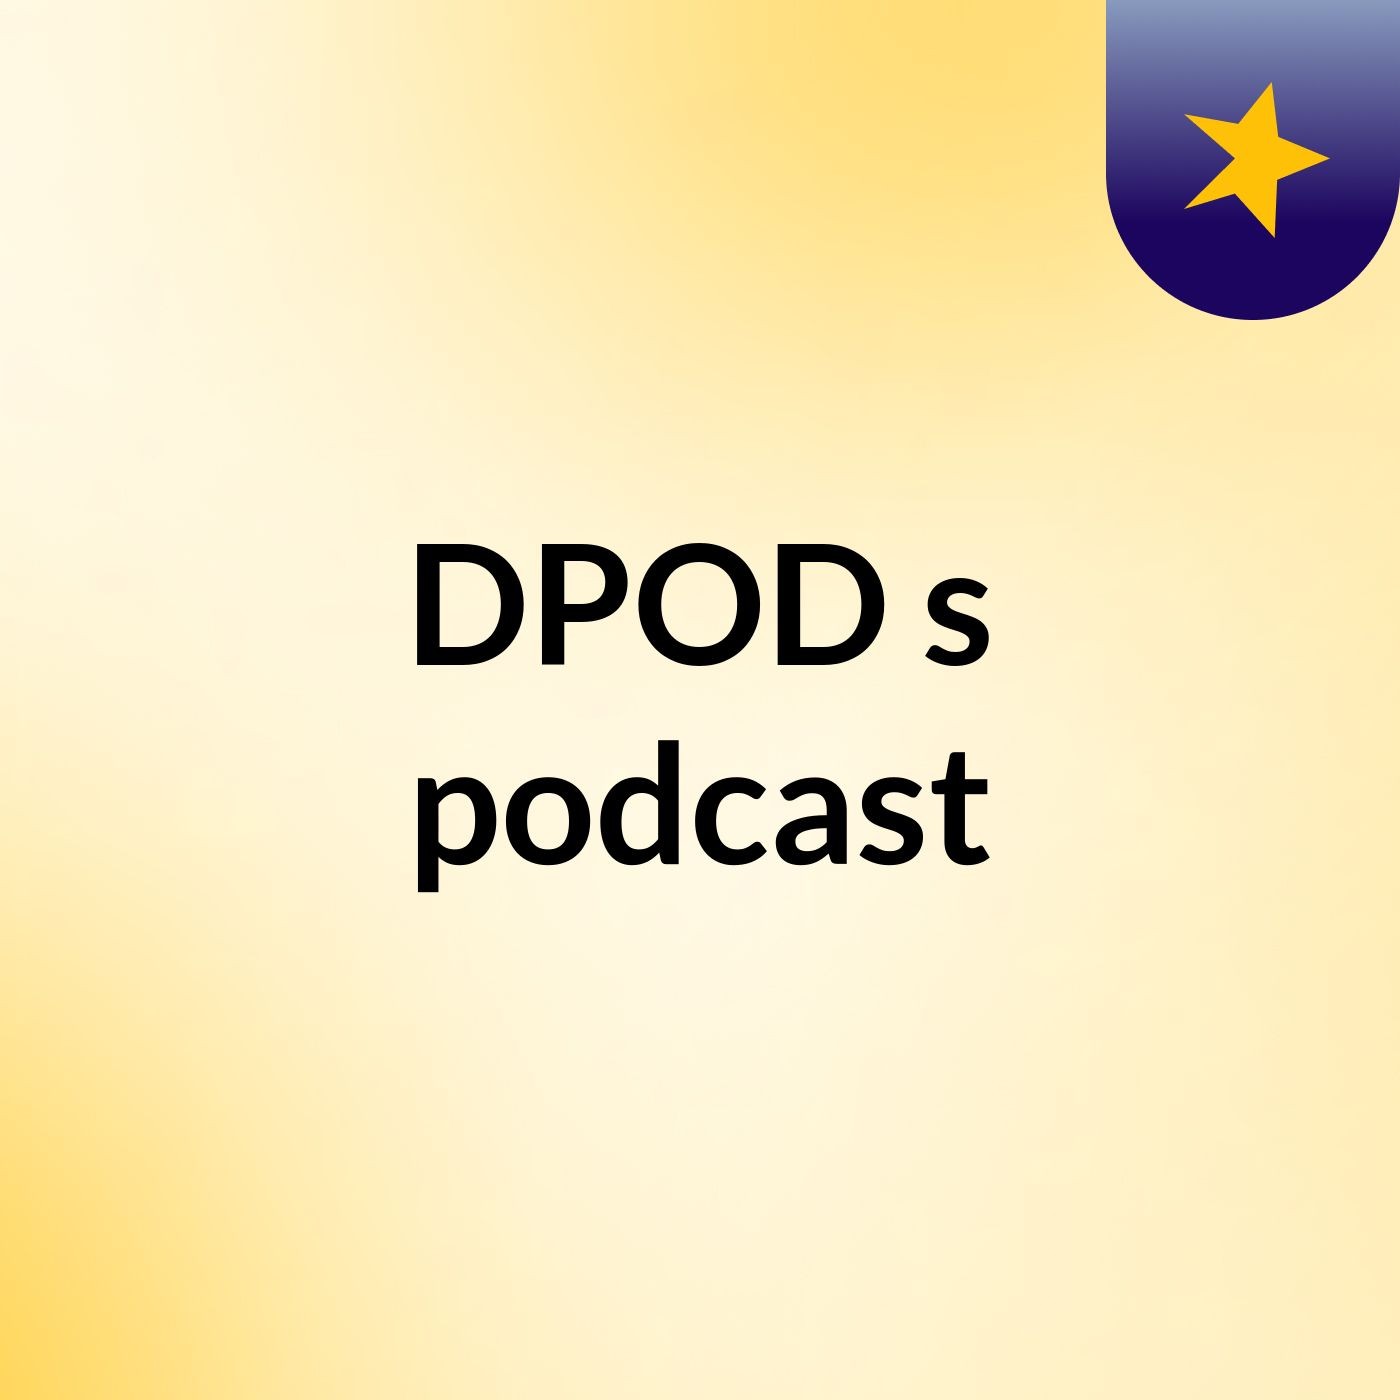 DPOD's podcast